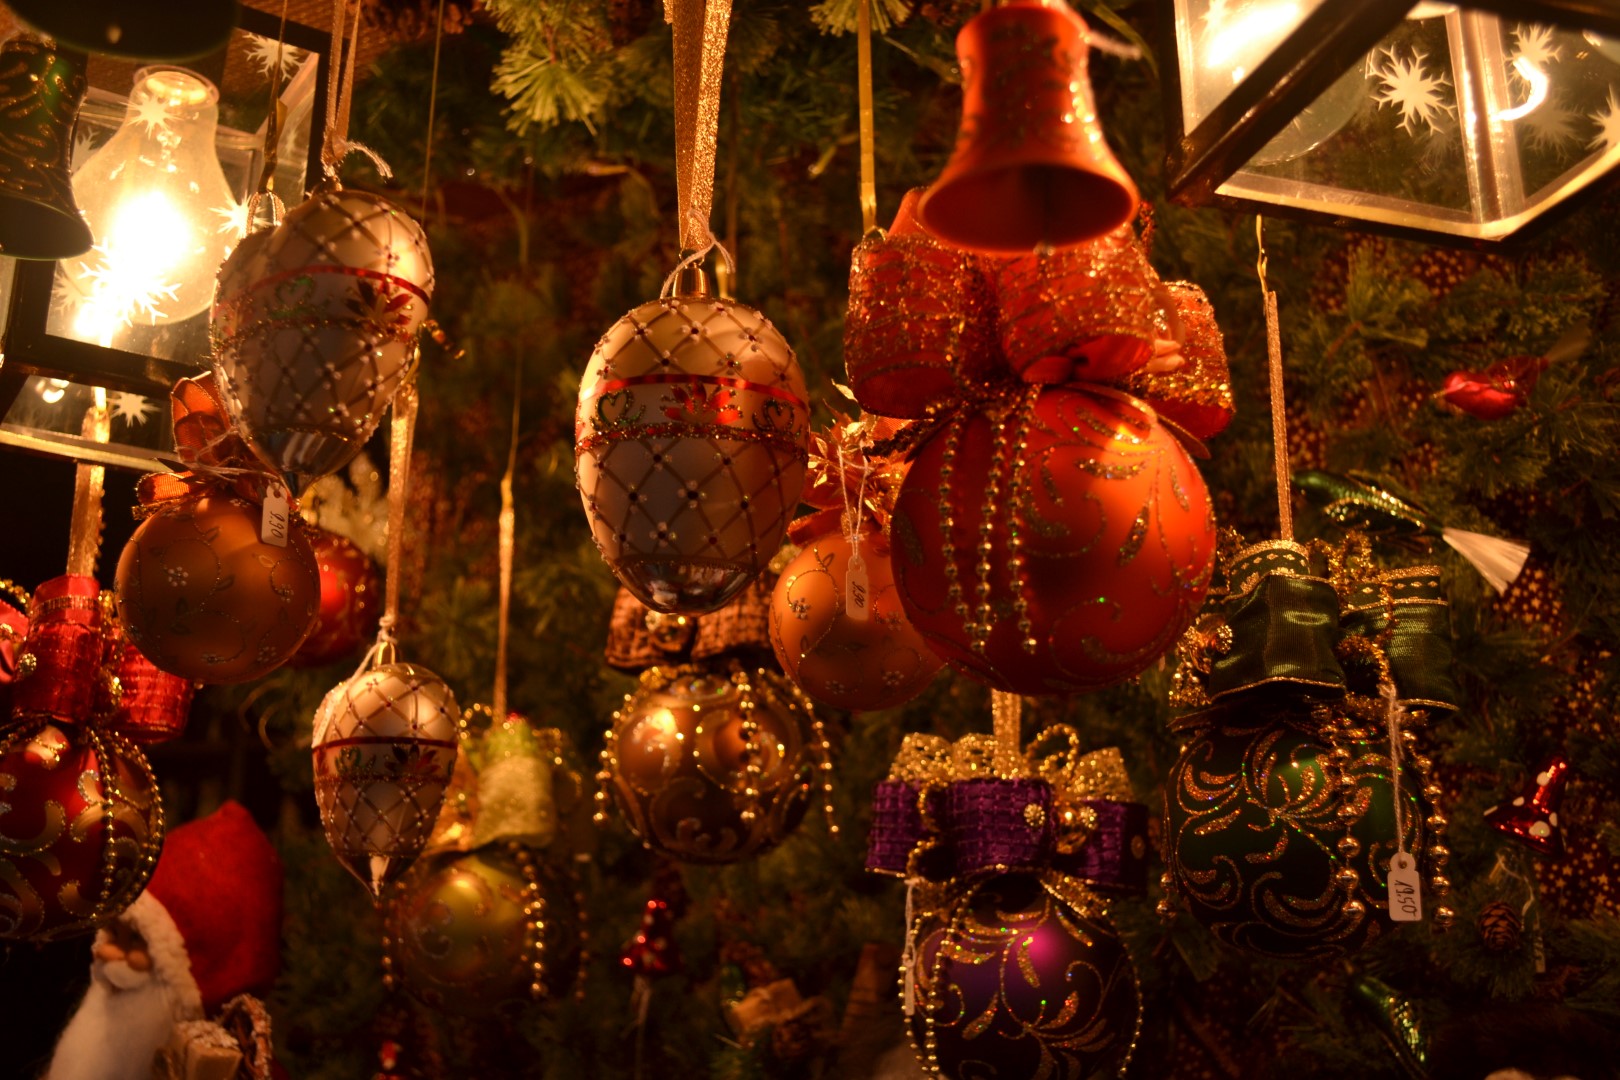 Bereid knal landinwaarts Hand Blown Glass Christmas Ornaments from Germany: A centuries old  tradition - WanderInGermany